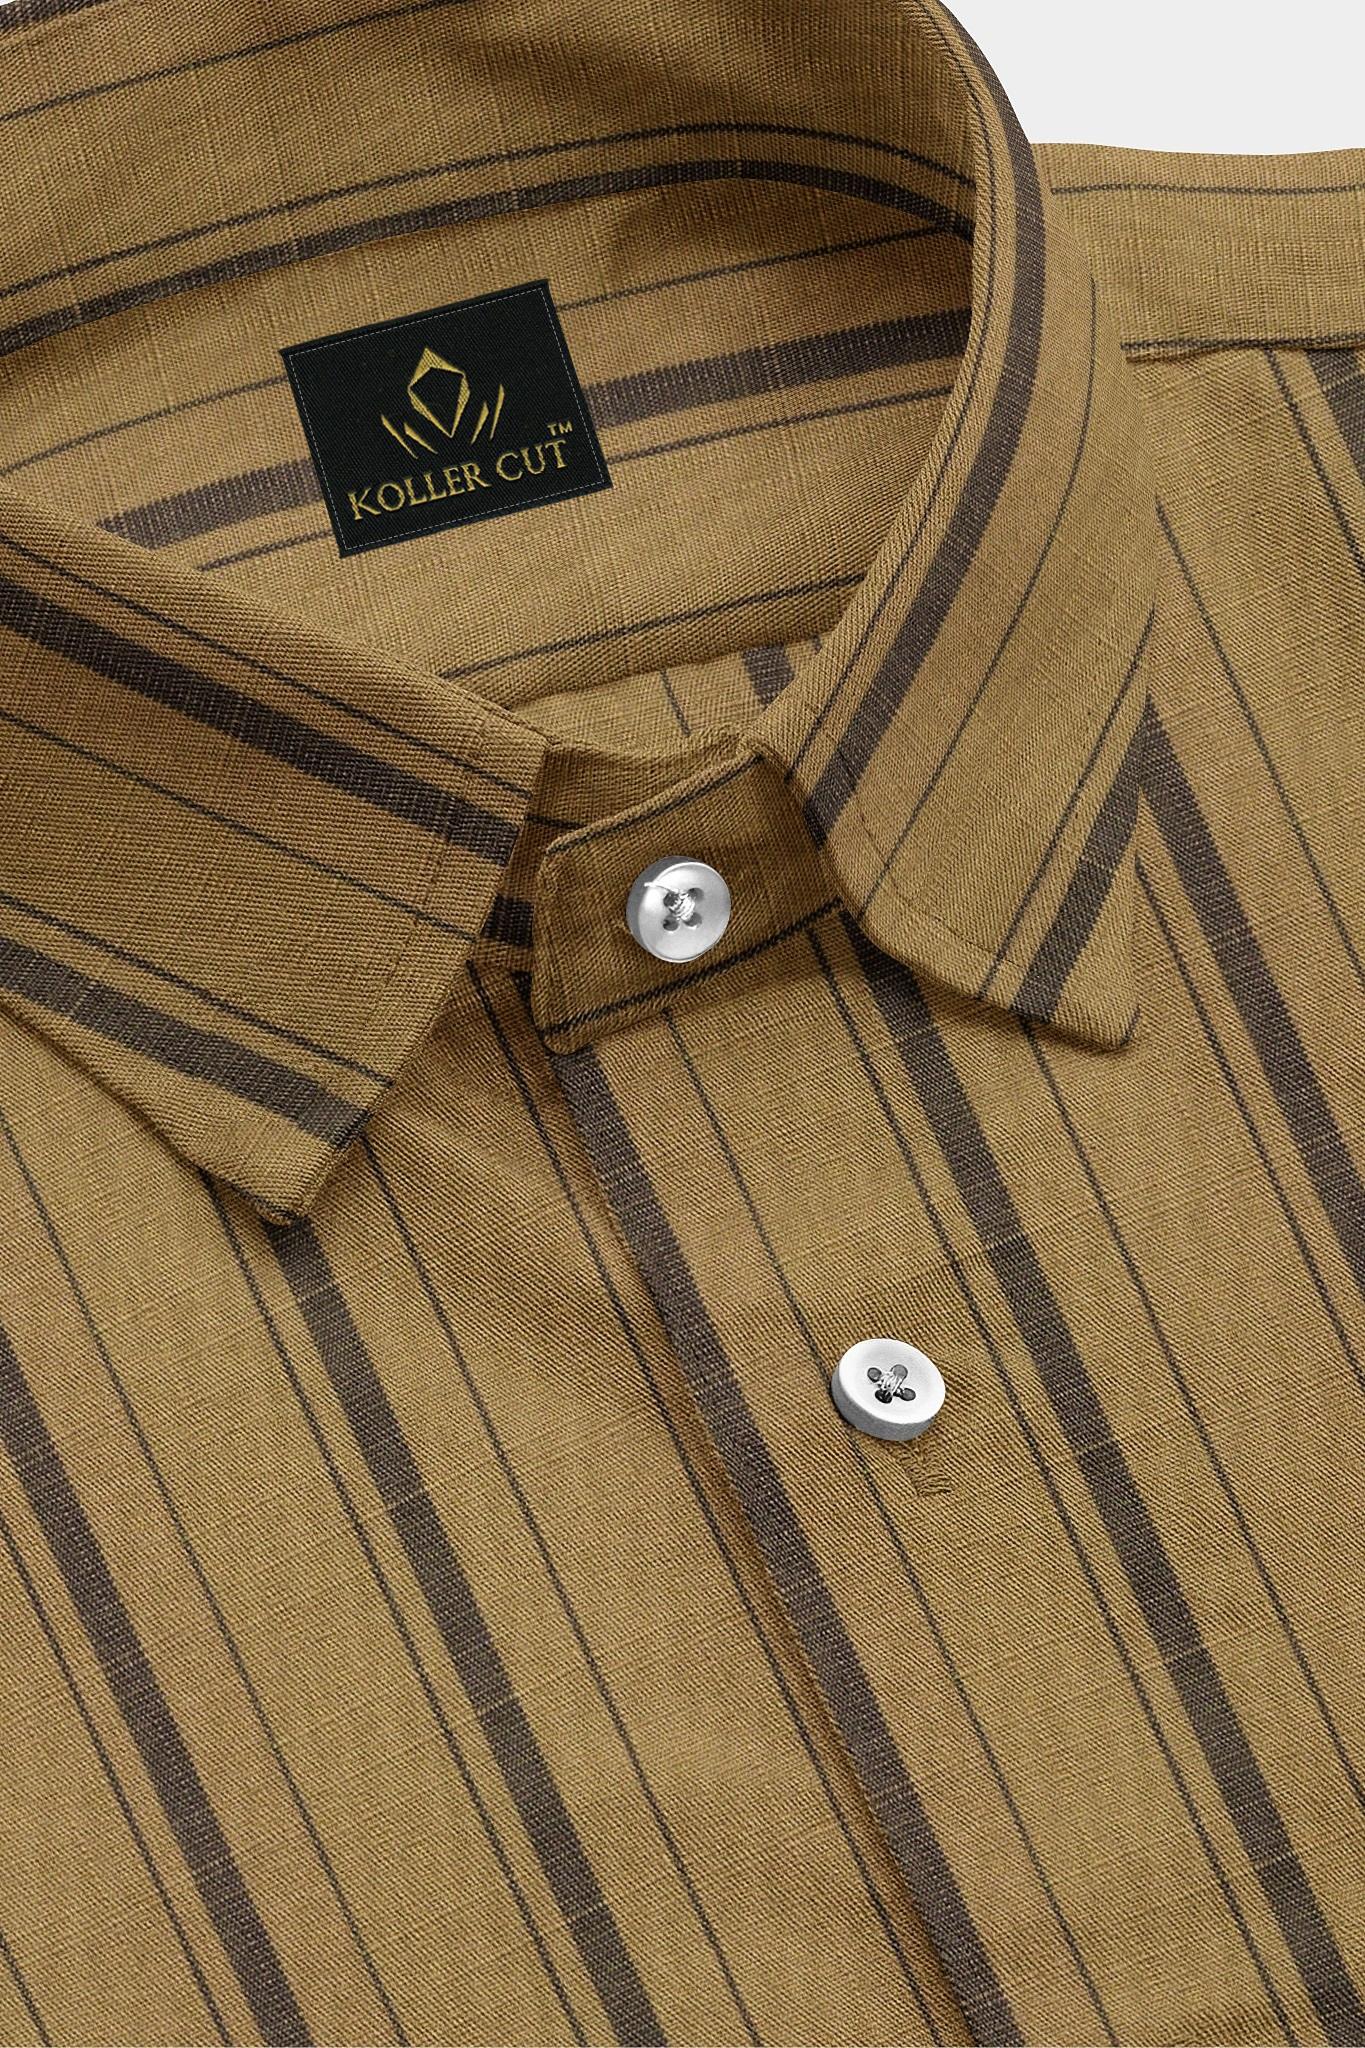 British Khaki and Taupe Wide Stripes Premium Cotton Linen Shirt